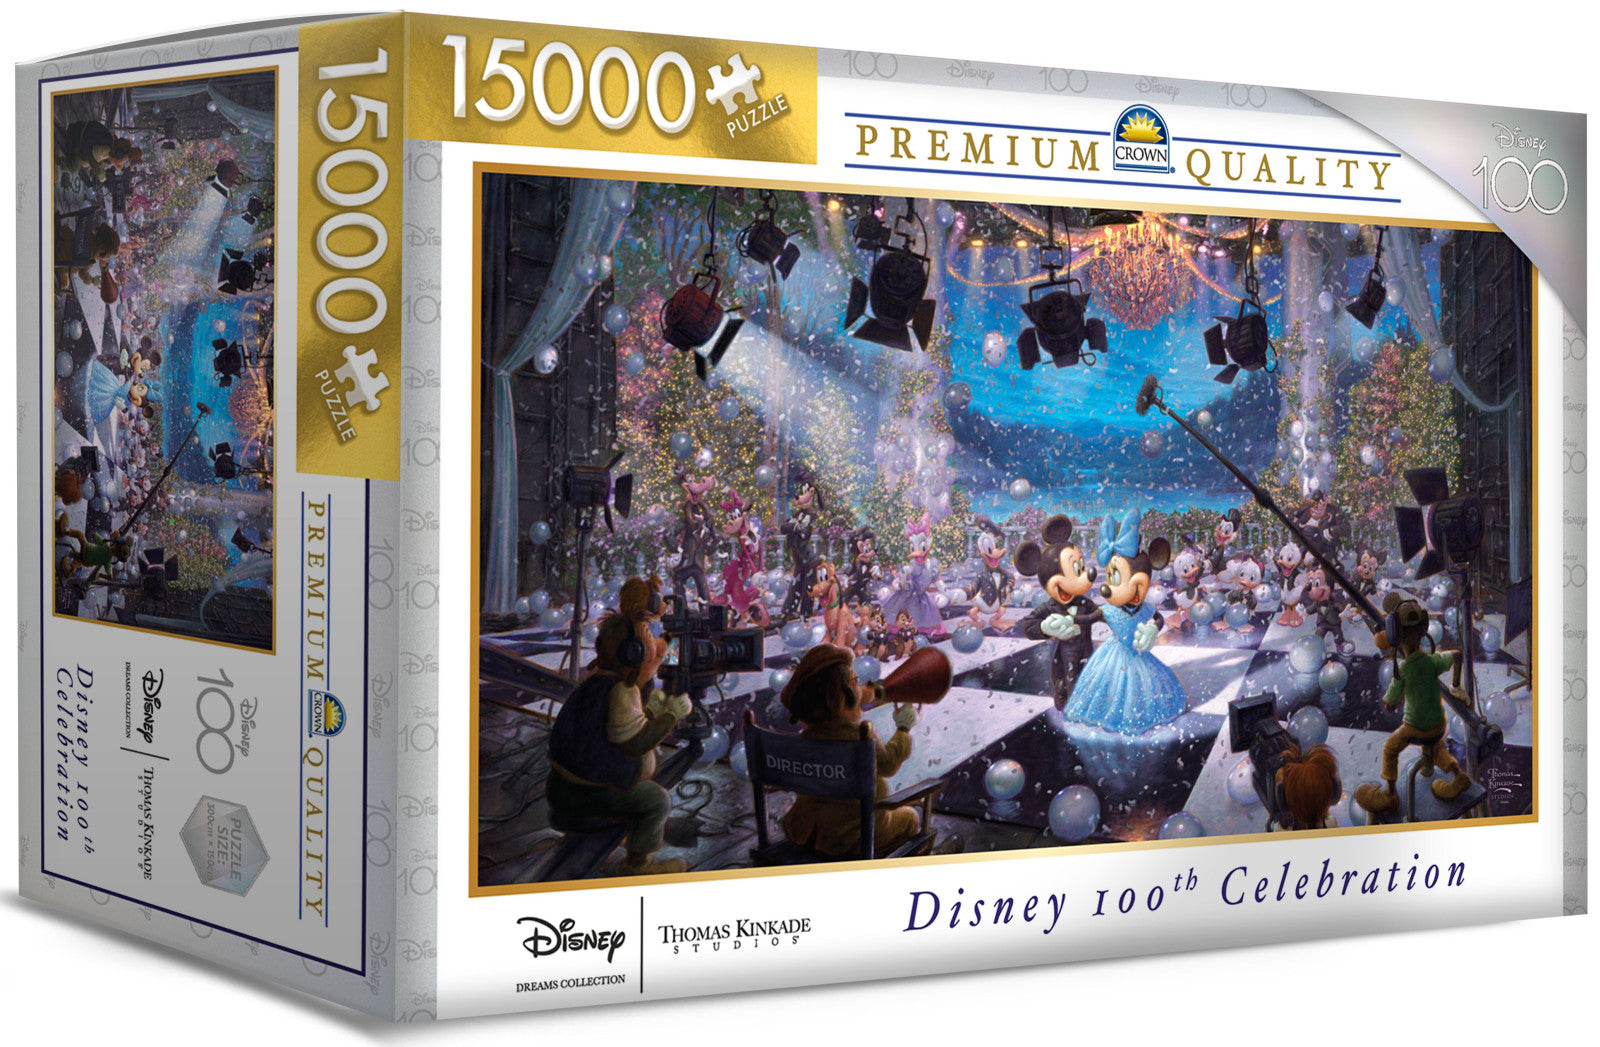 Disney 100 Years of Wonder Jigsaw Puzzle 500-piece by MaxGoudiss